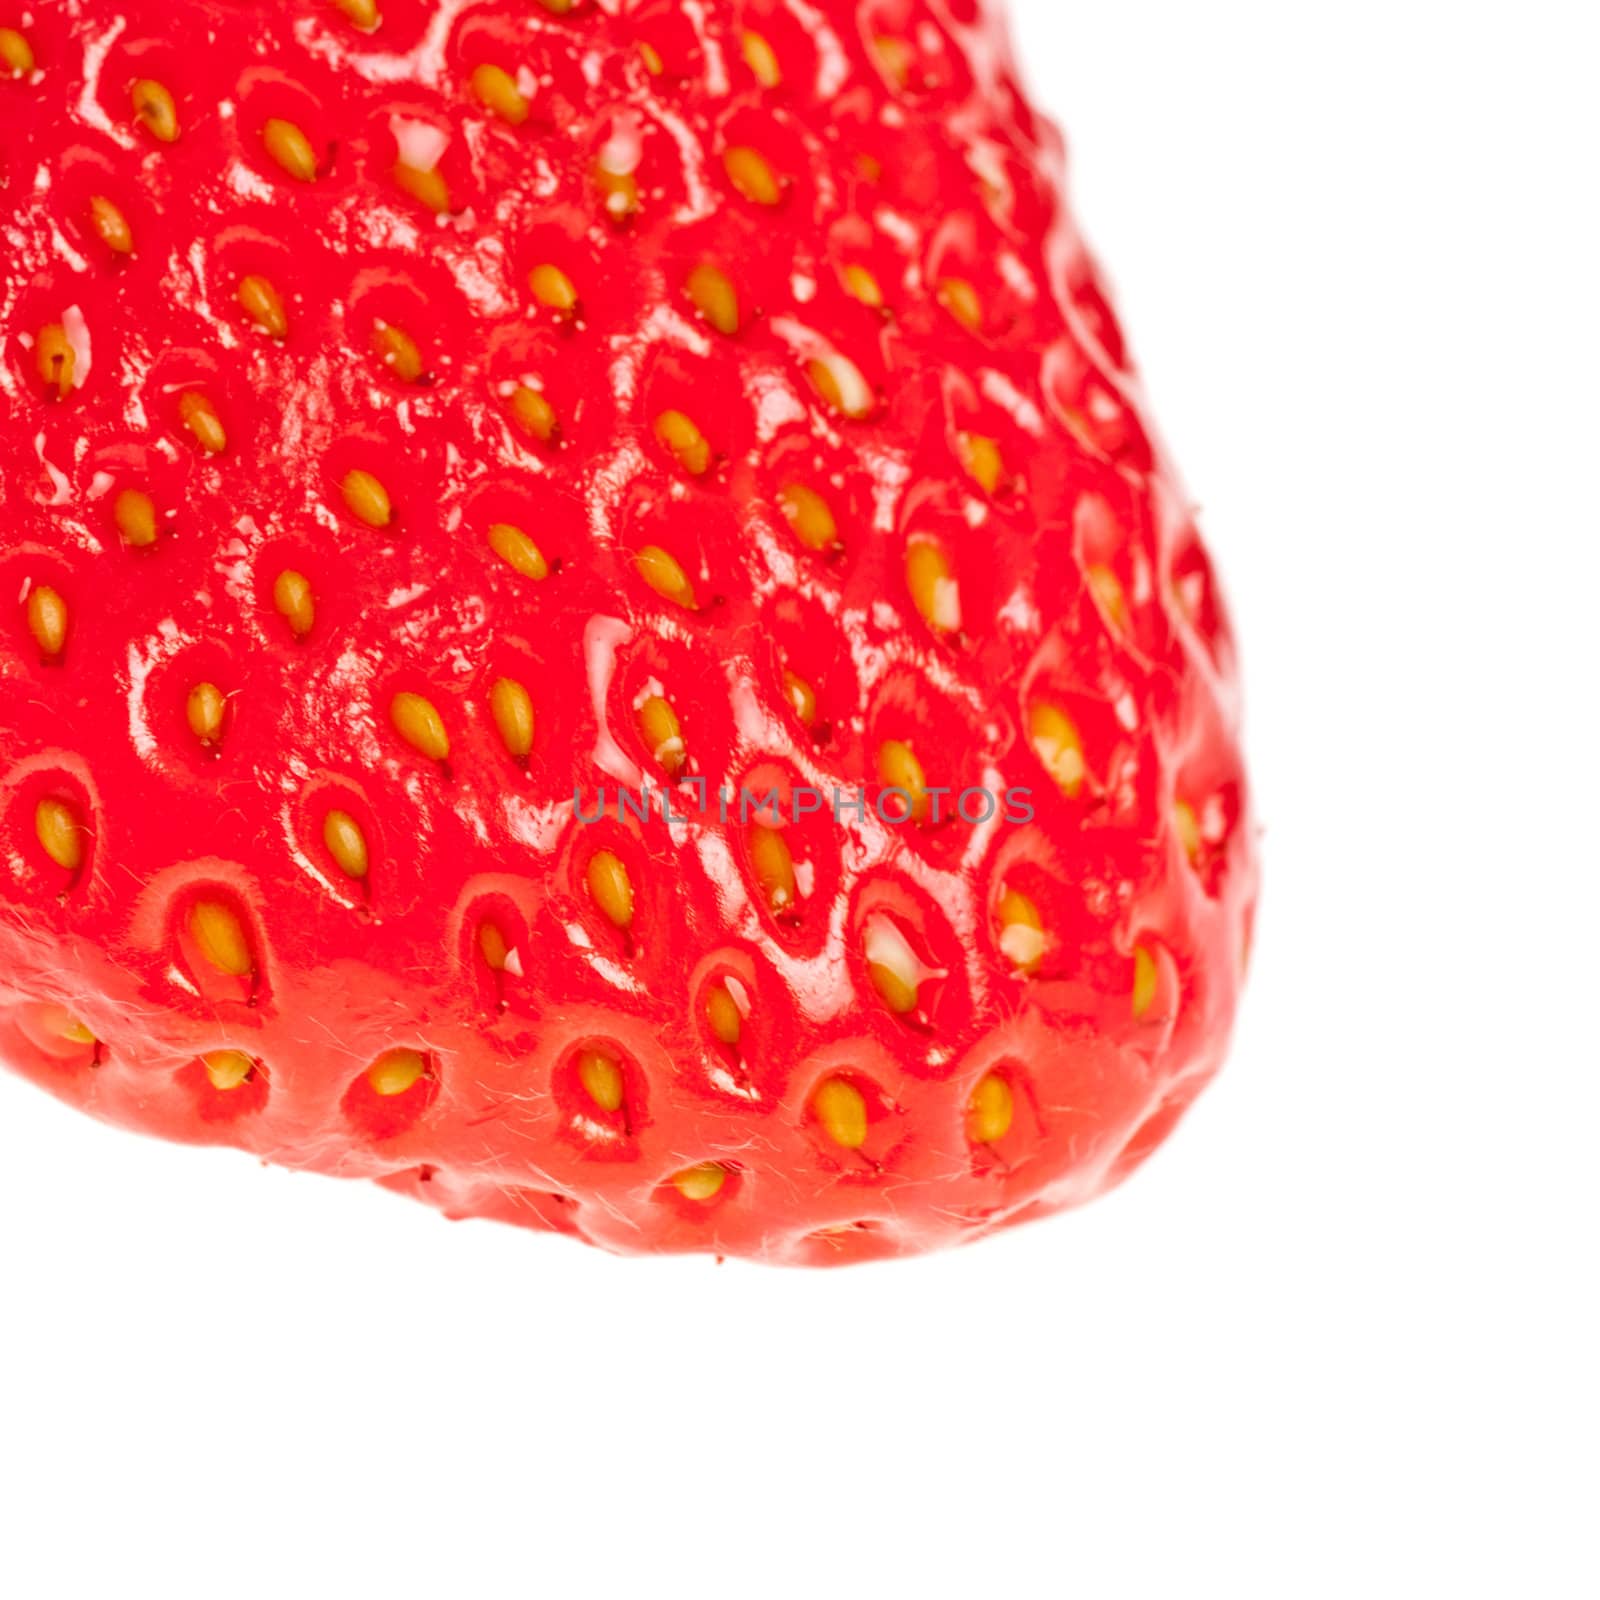 fresh strawberry part isolated on white background